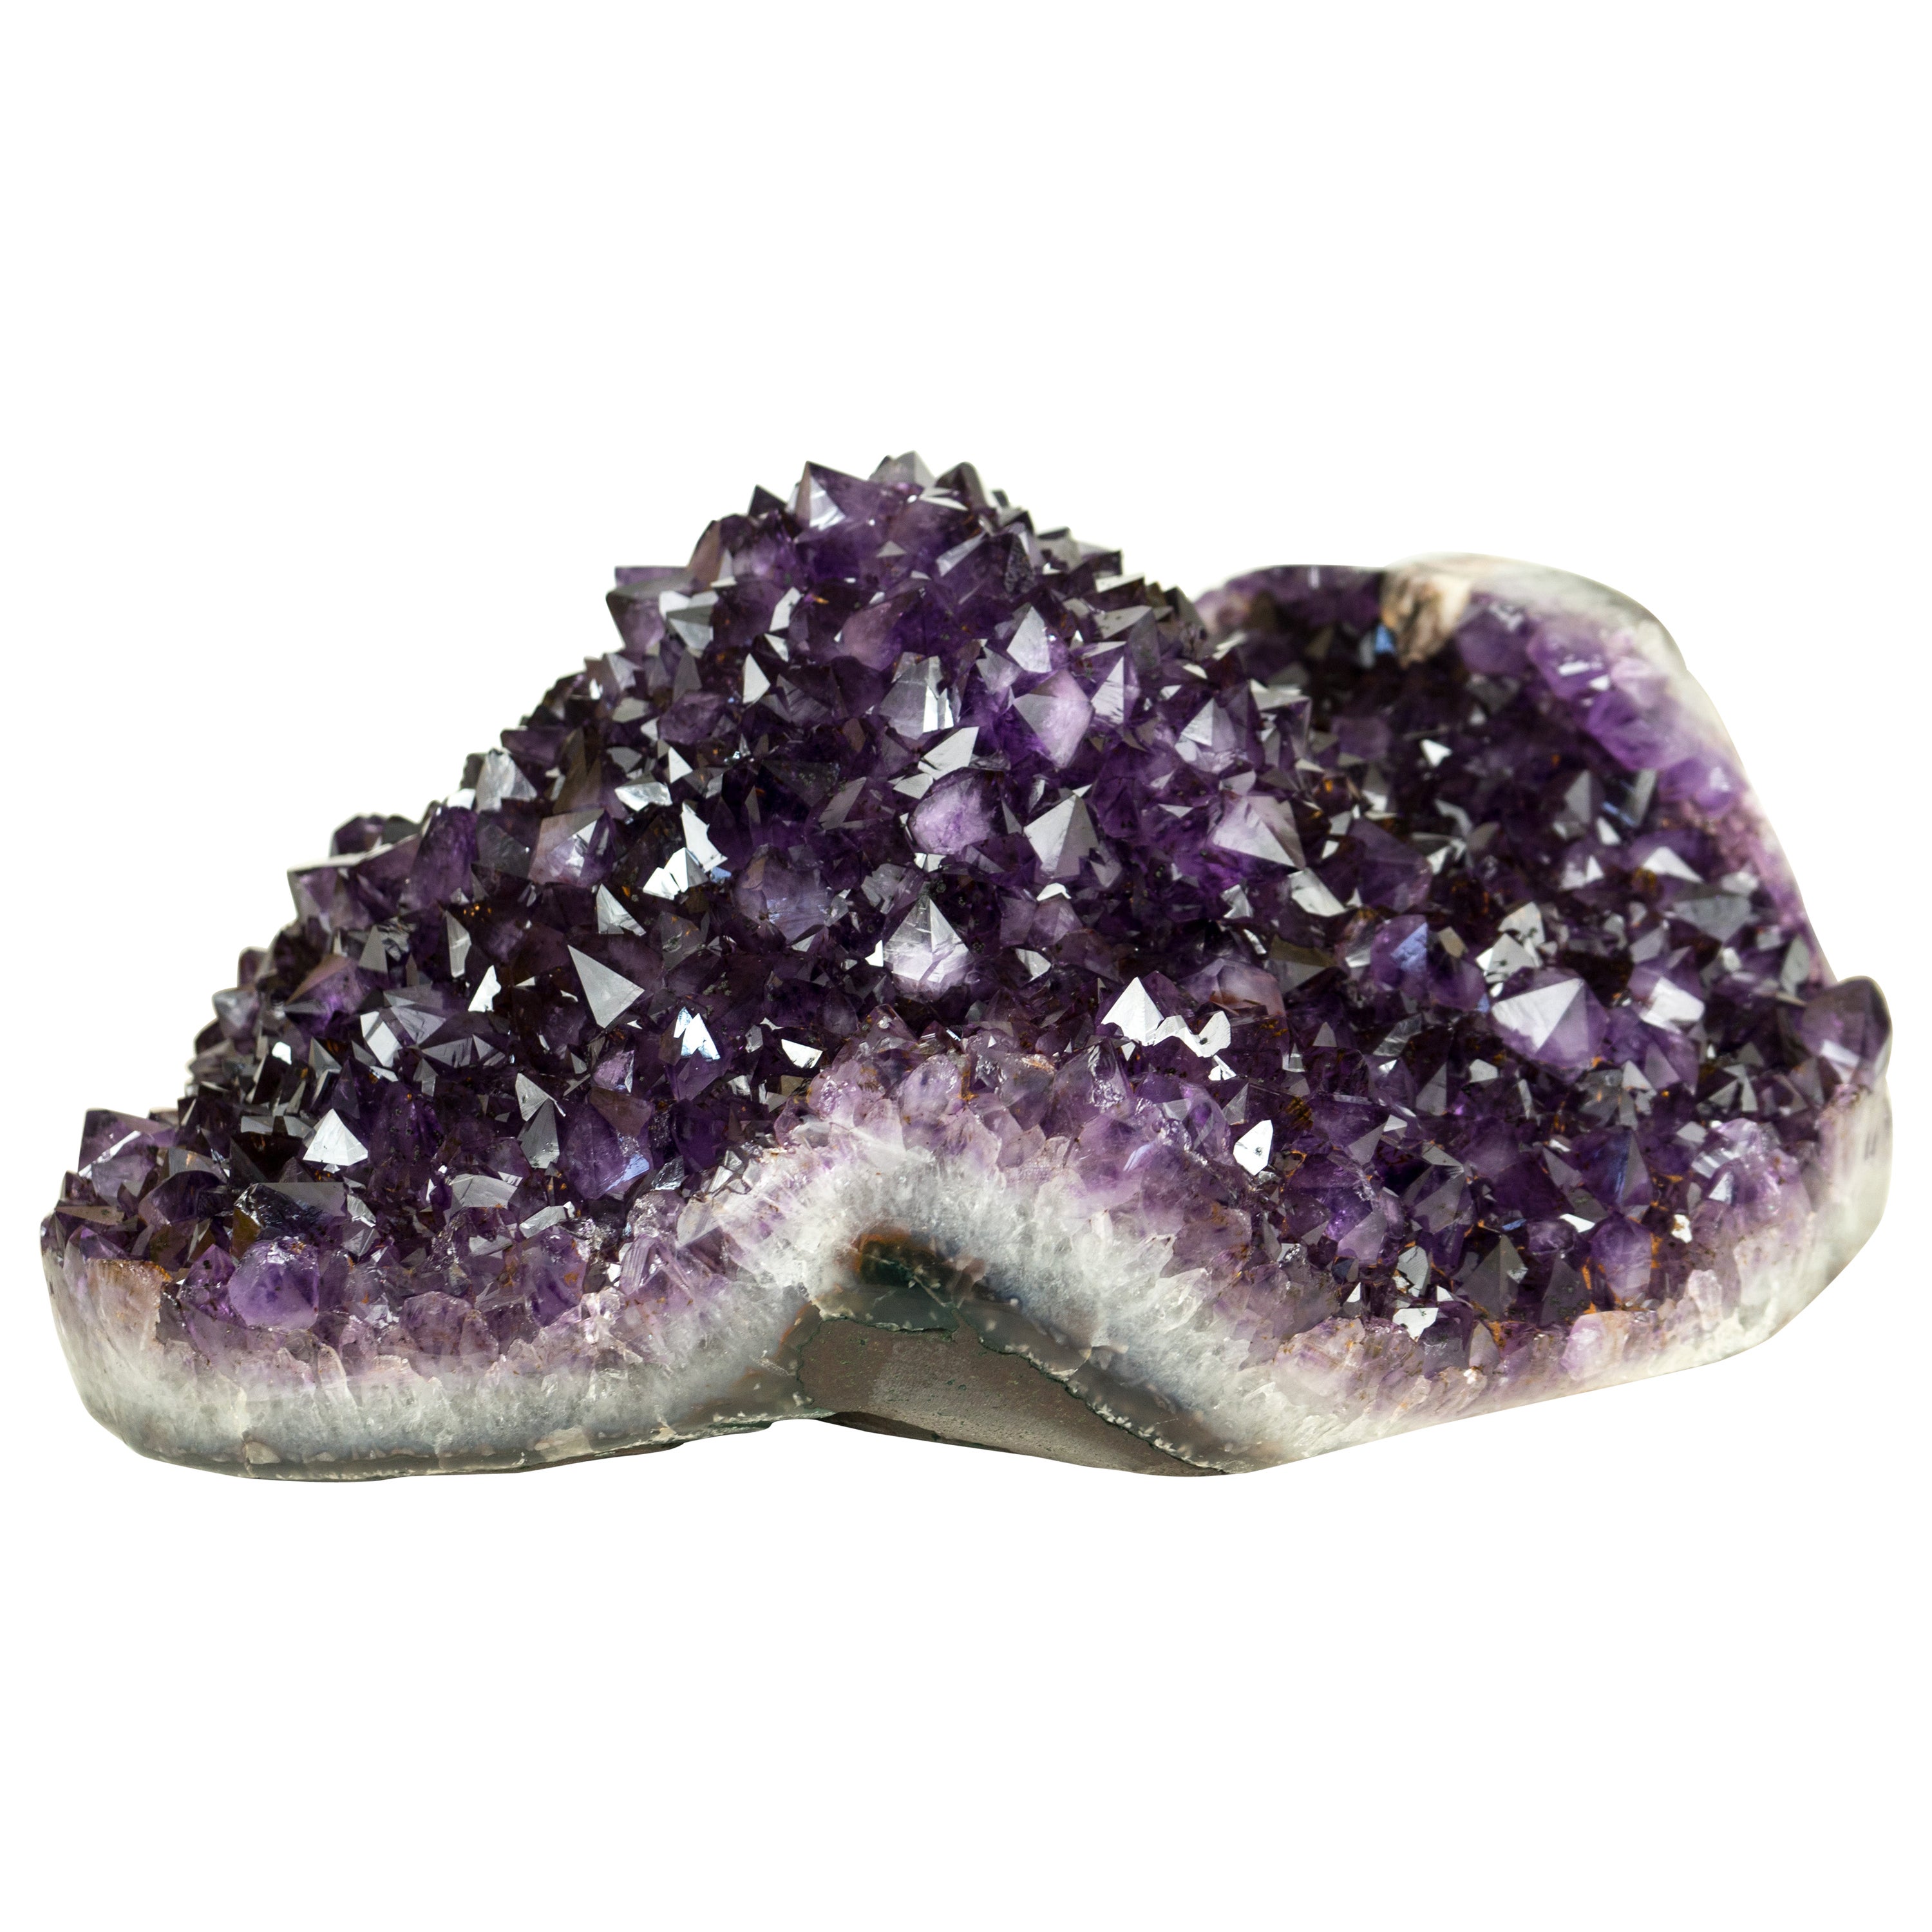 X-Large Amethyst Geode Flower with AAA Dark Purple Amethyst Druzy For Sale